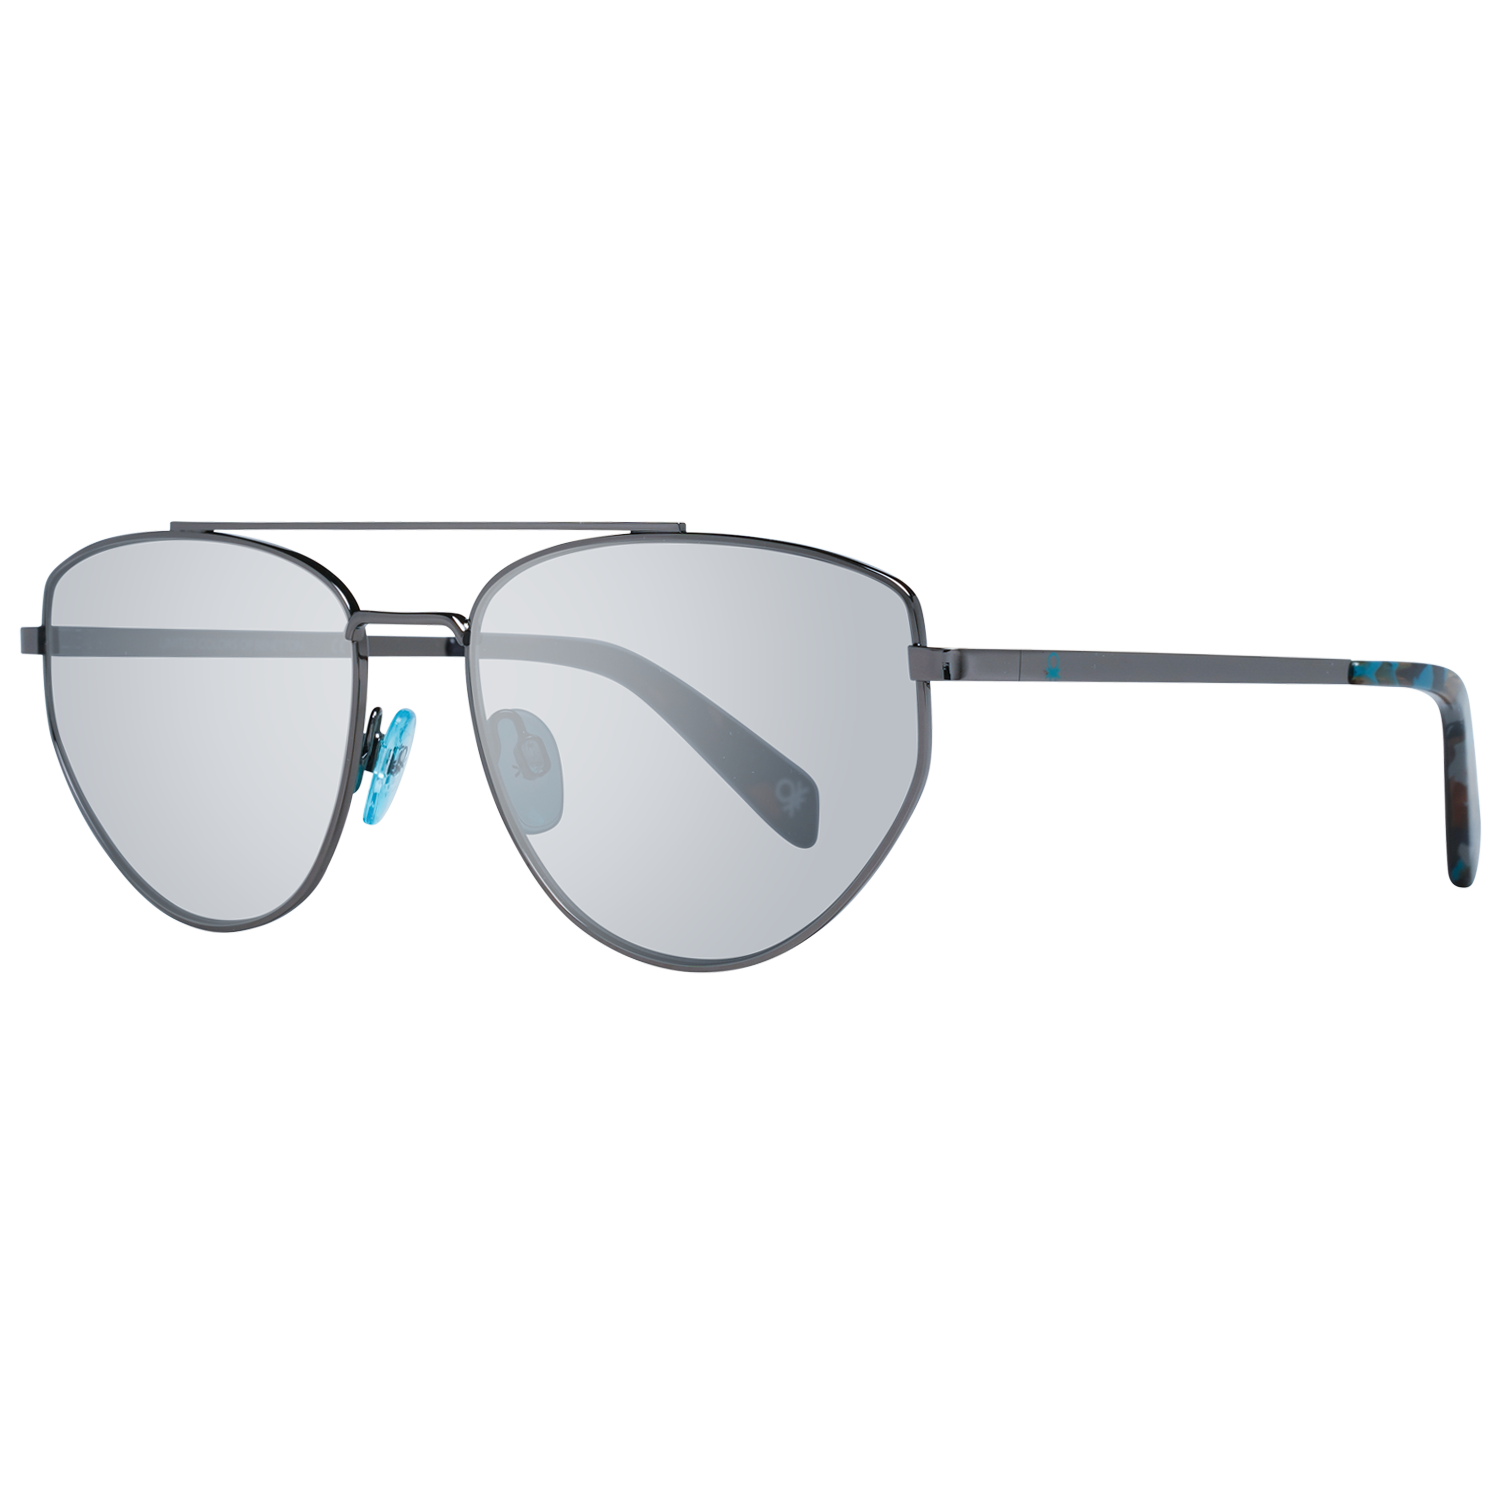 Benetton Sunglasses Benetton Sunglasses BE7025 930 51 Eyeglasses Eyewear UK USA Australia 